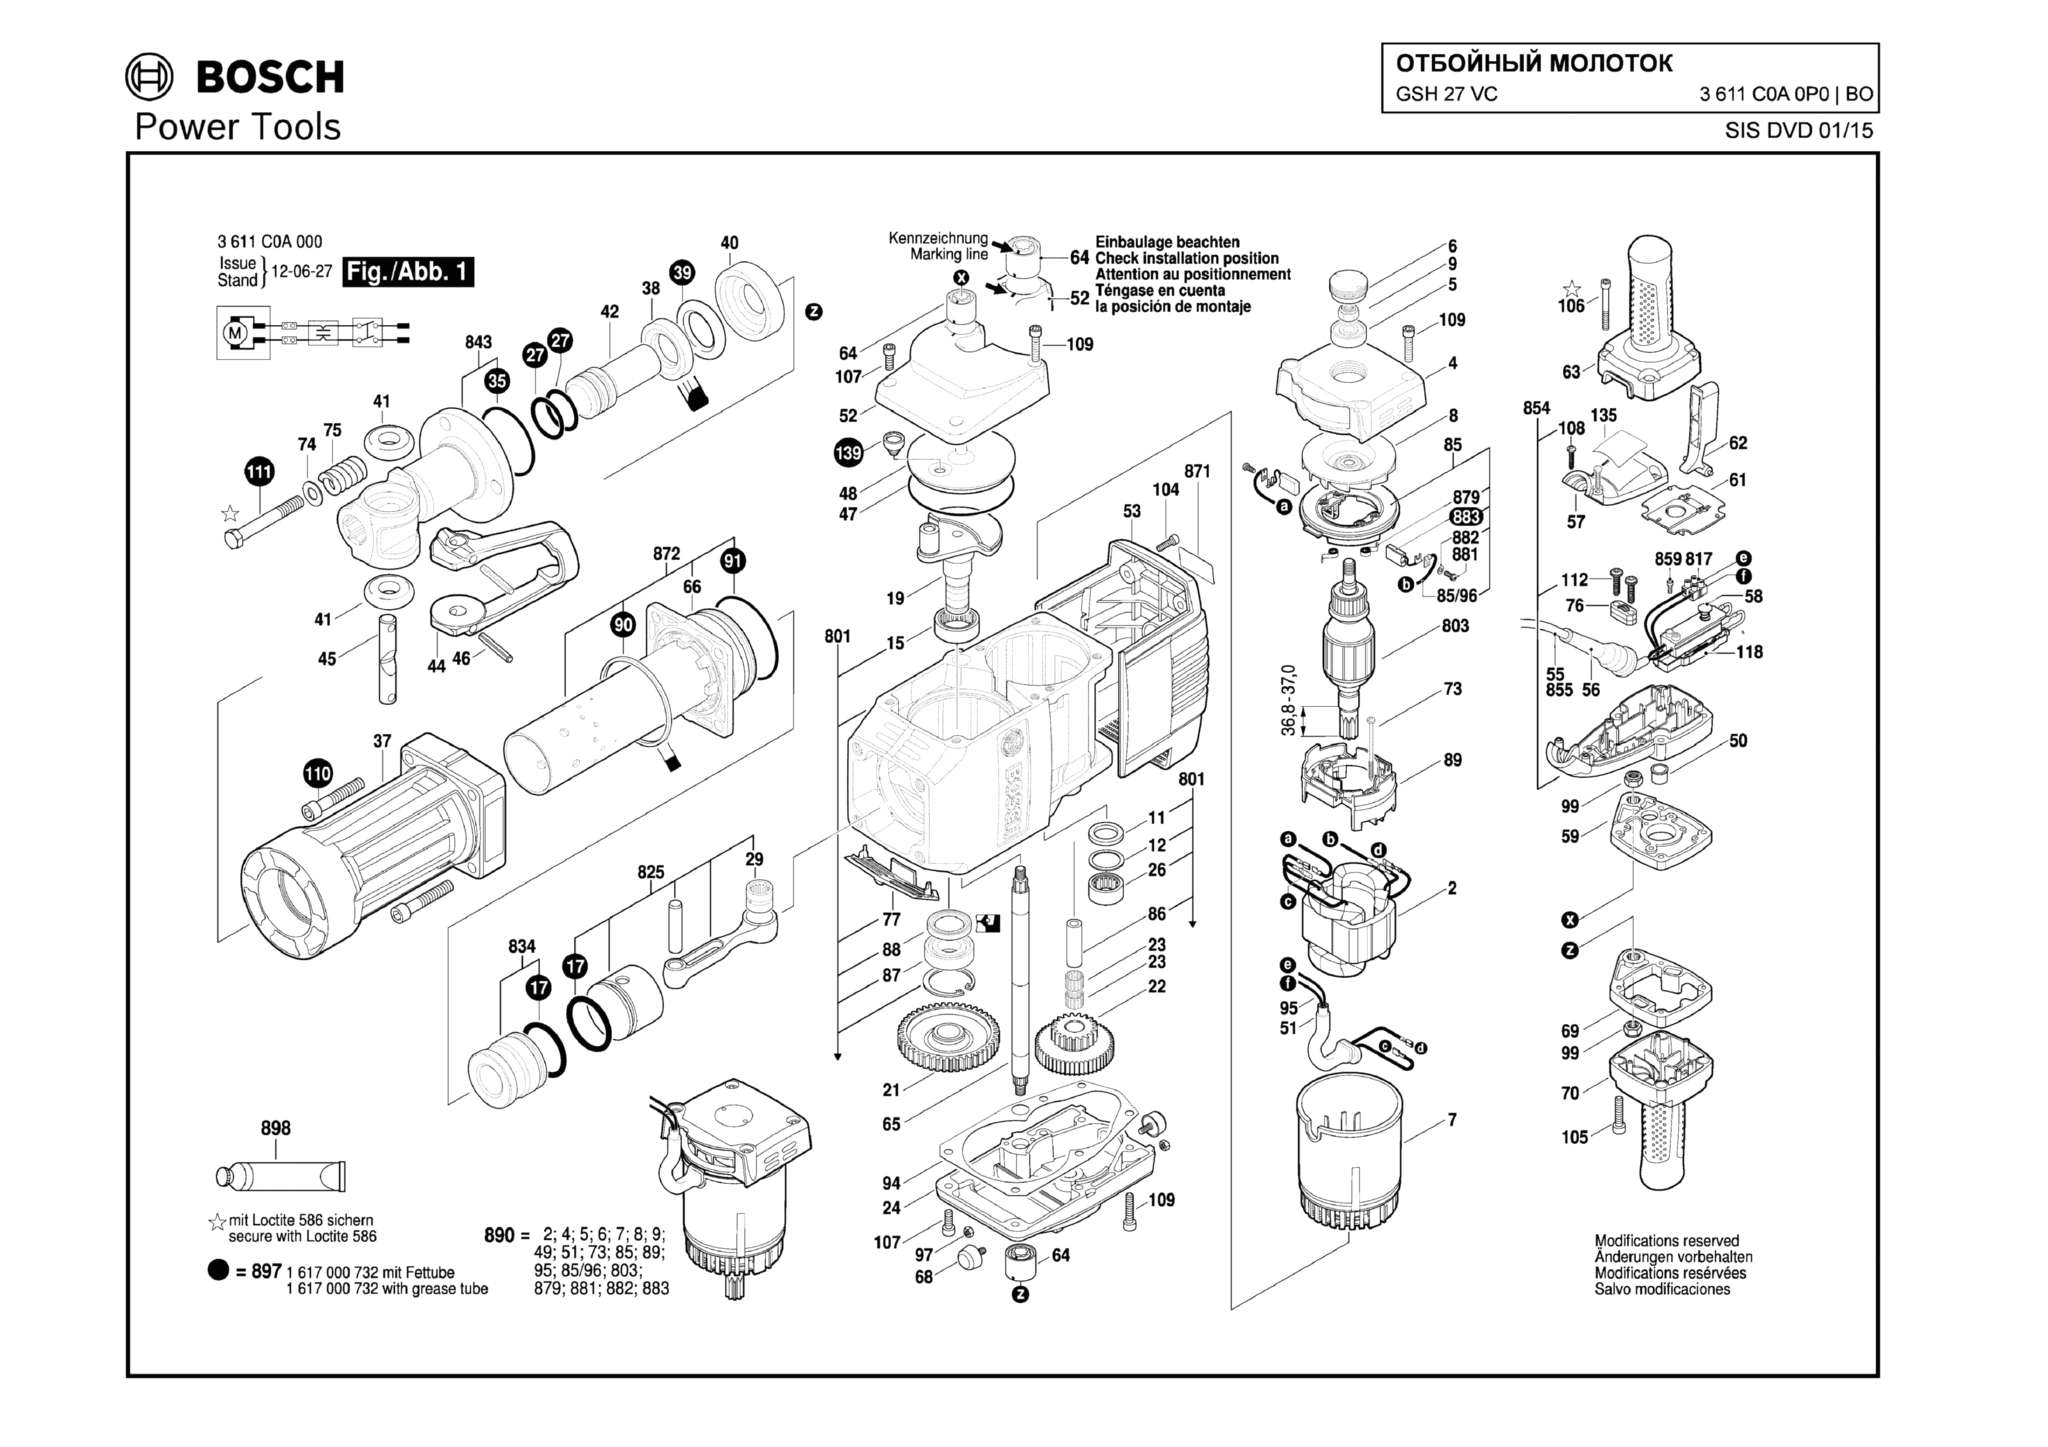 Запчасти, схема и деталировка Bosch GSH 27 VC (ТИП 3611C0A0P0)